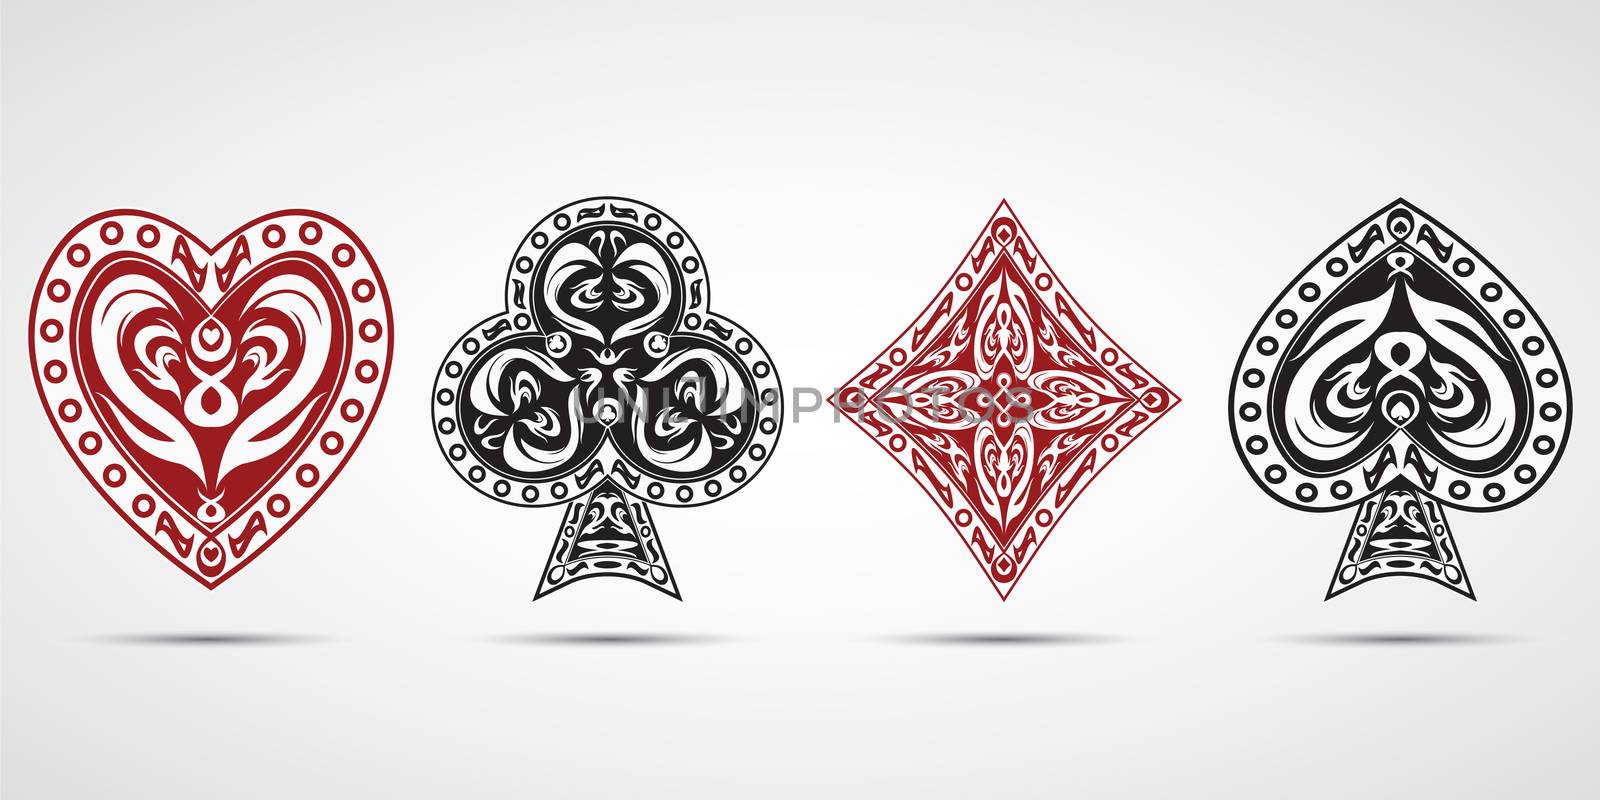 spades, hearts, diamonds, clubs poker cards symbols grey background by Lemon_workshop